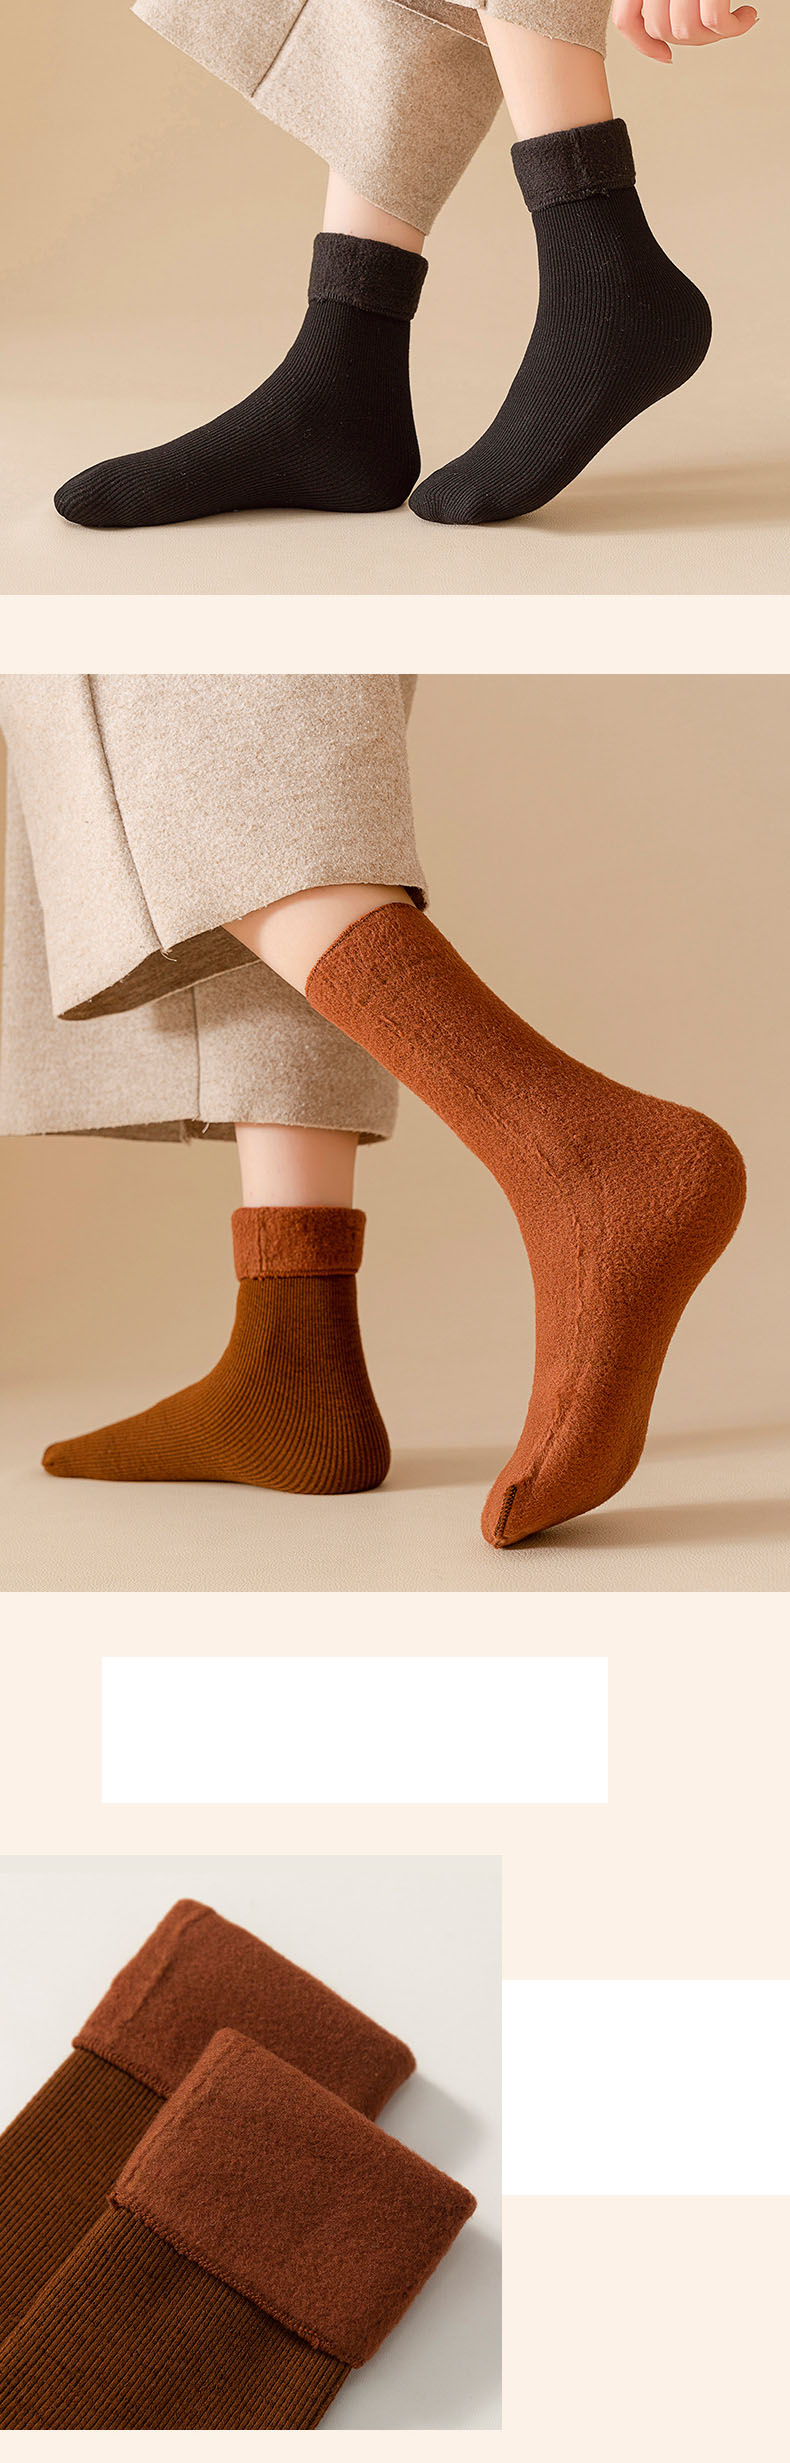 sock26  ถุงเท้าวูลกันหนาวแบบไม่หนามาก